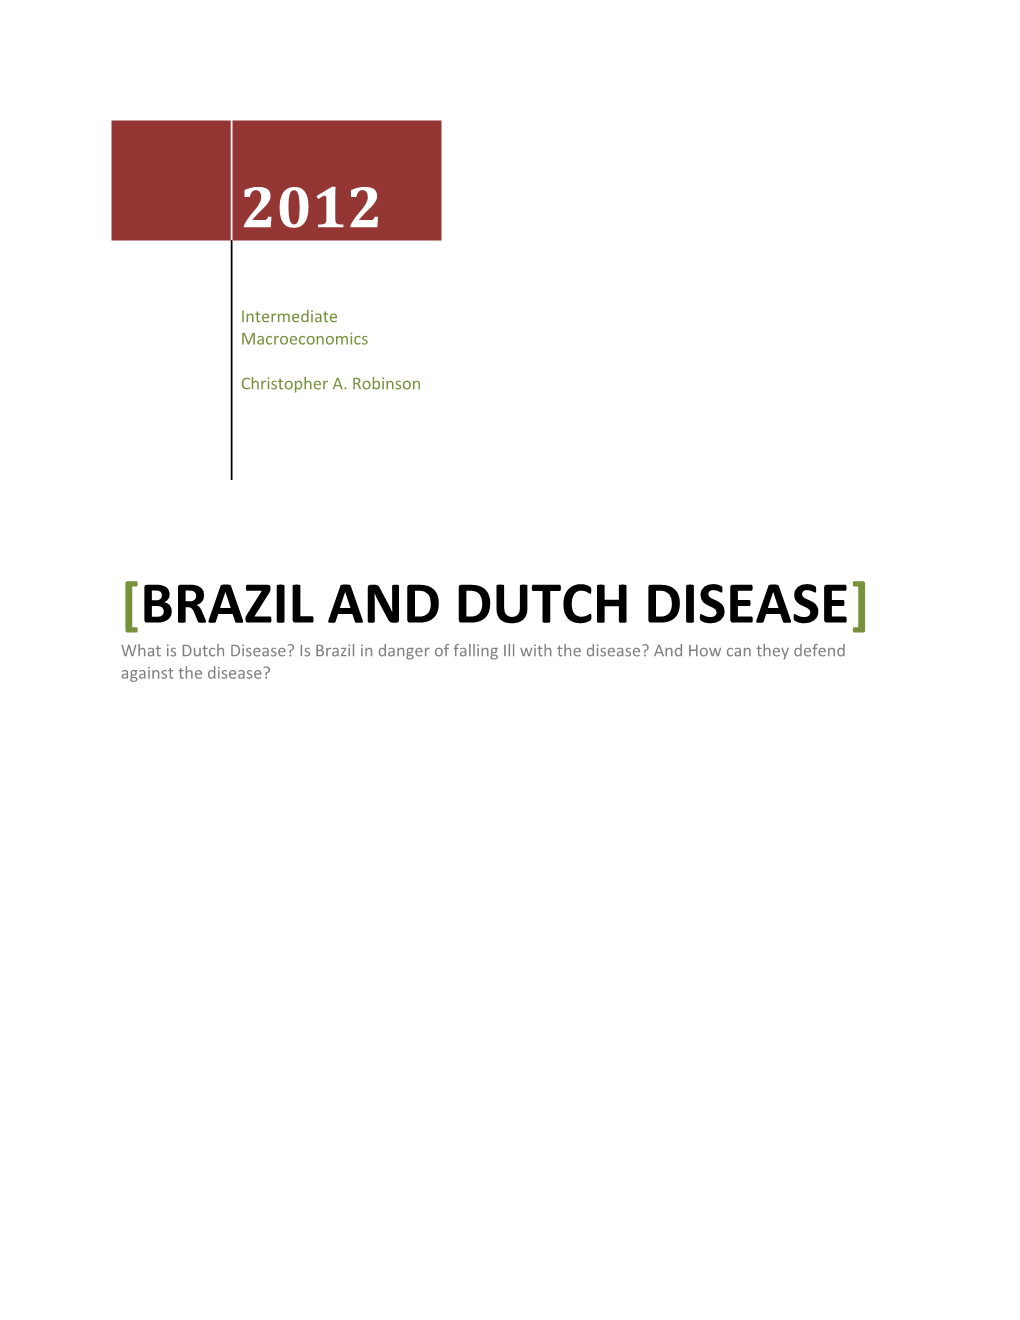 Brazil and Dutch Disease